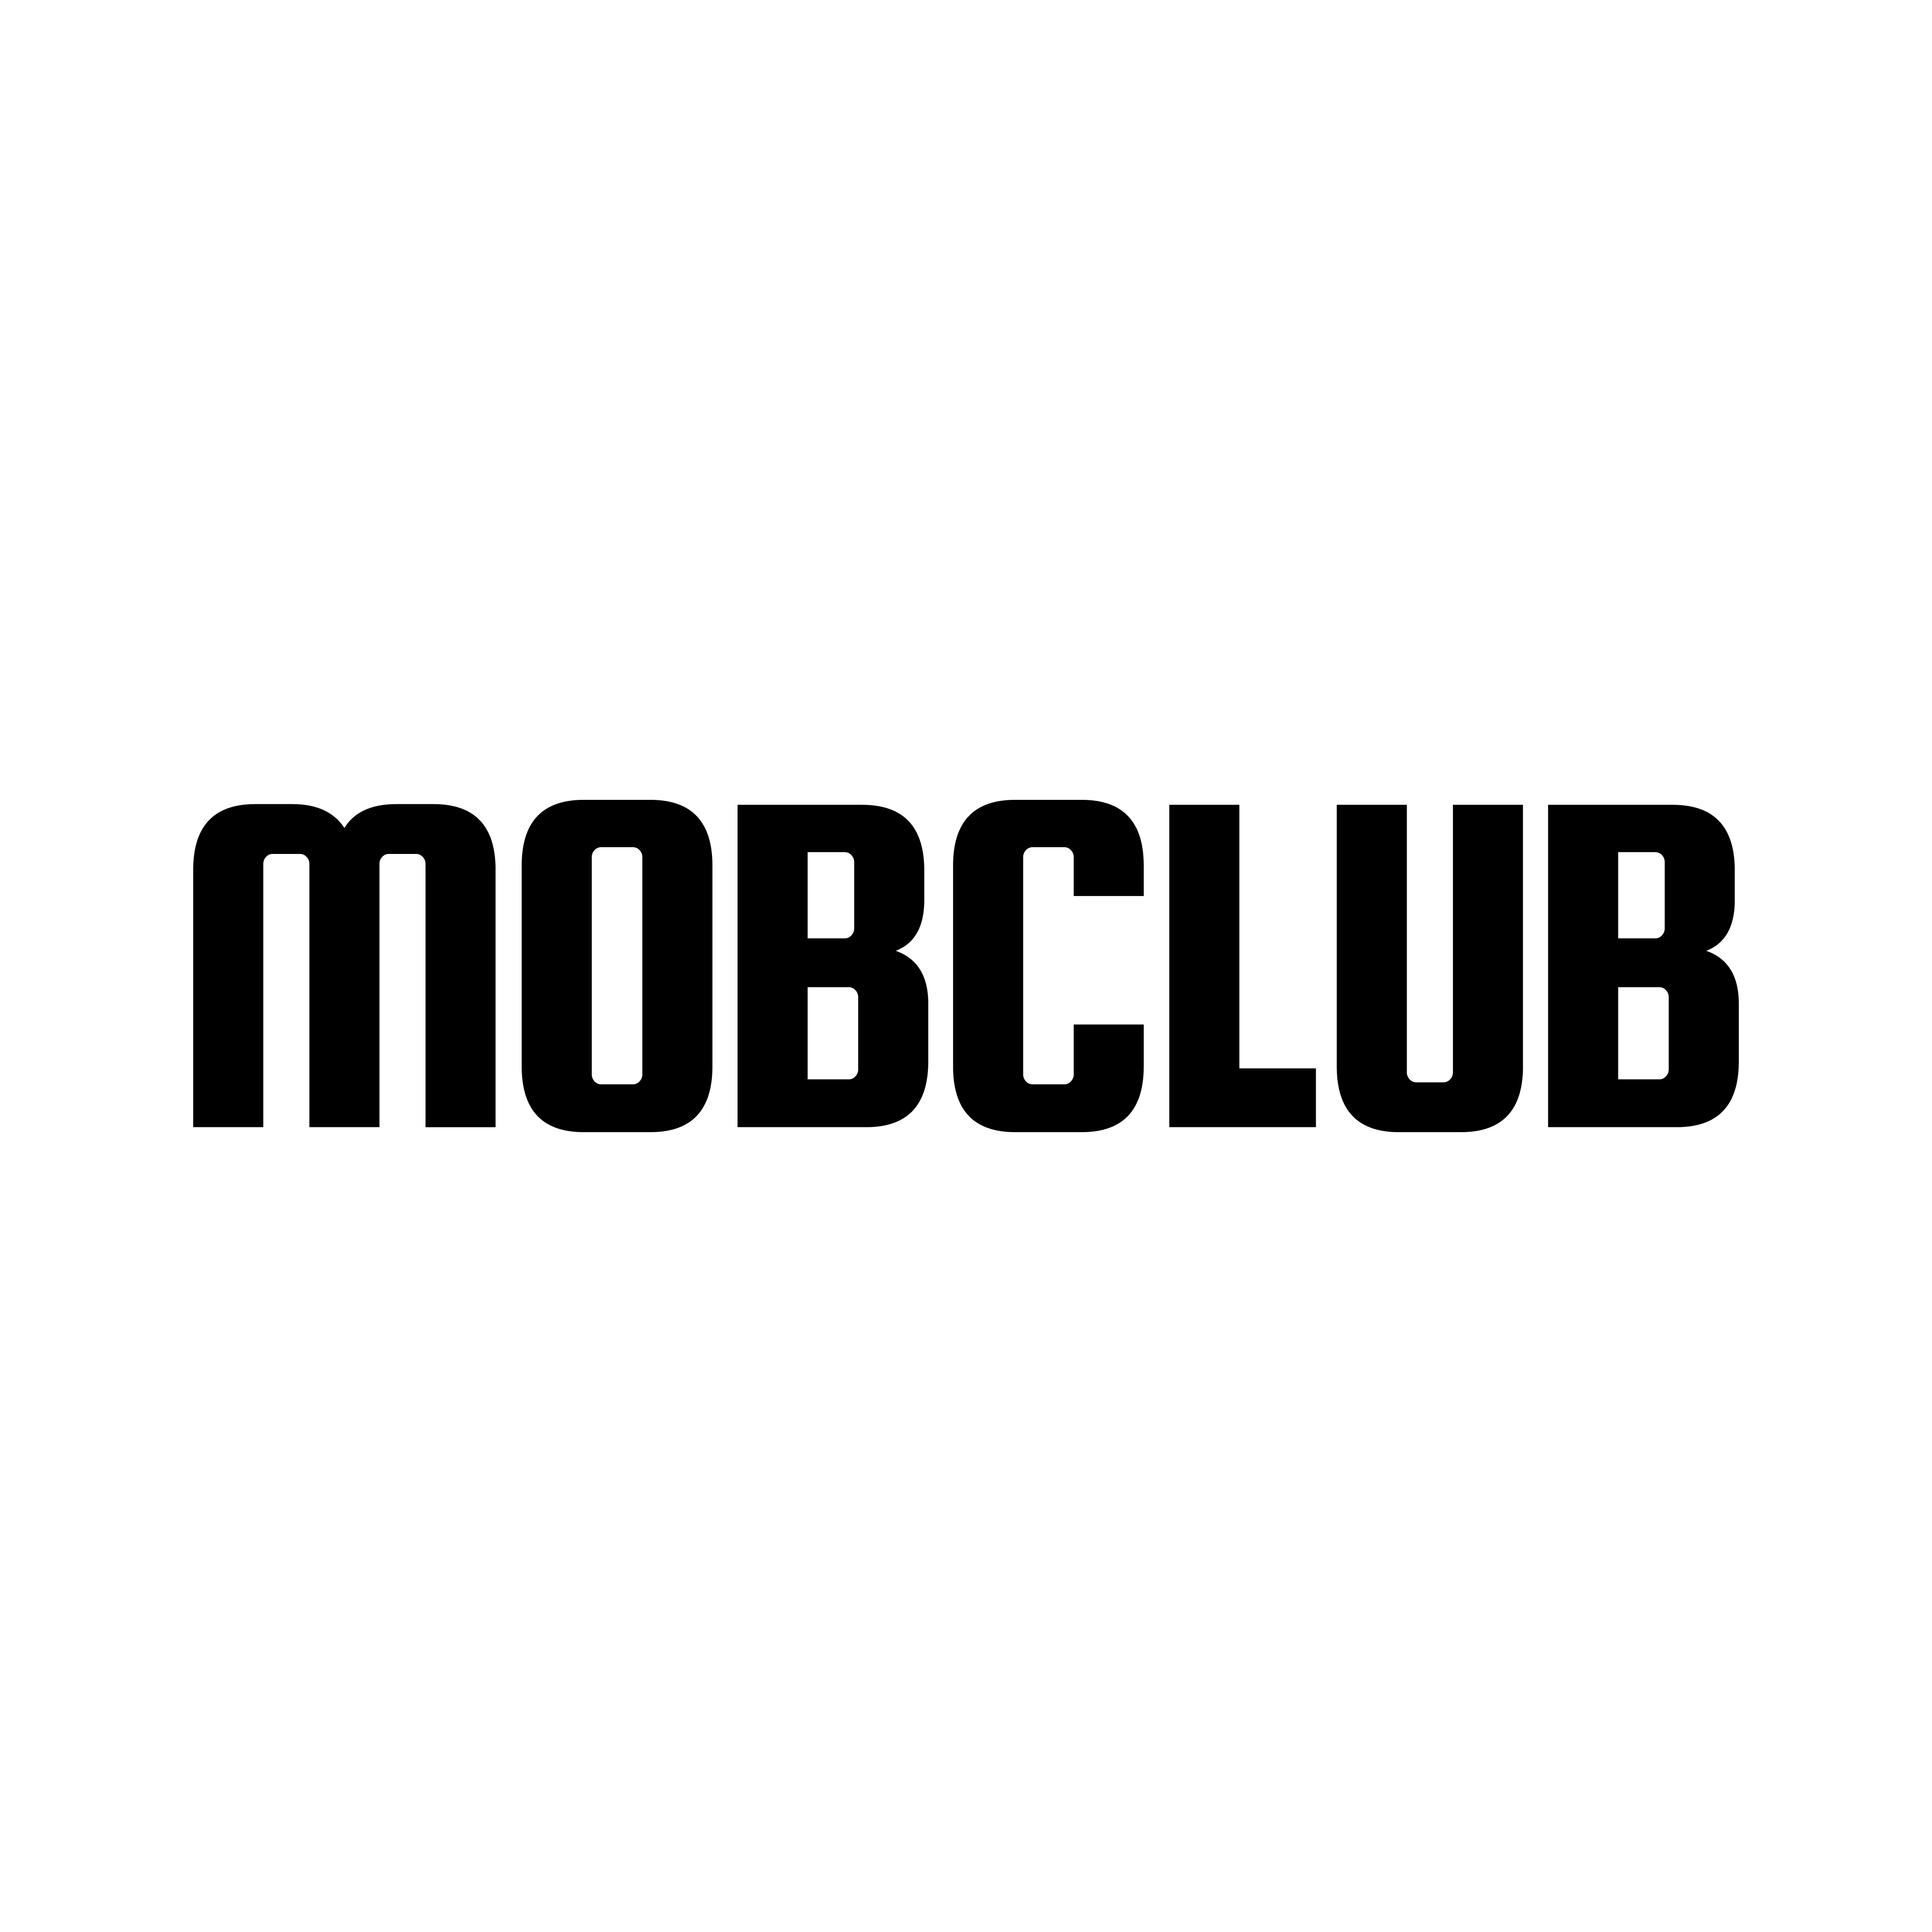 Mobclub A Coruña